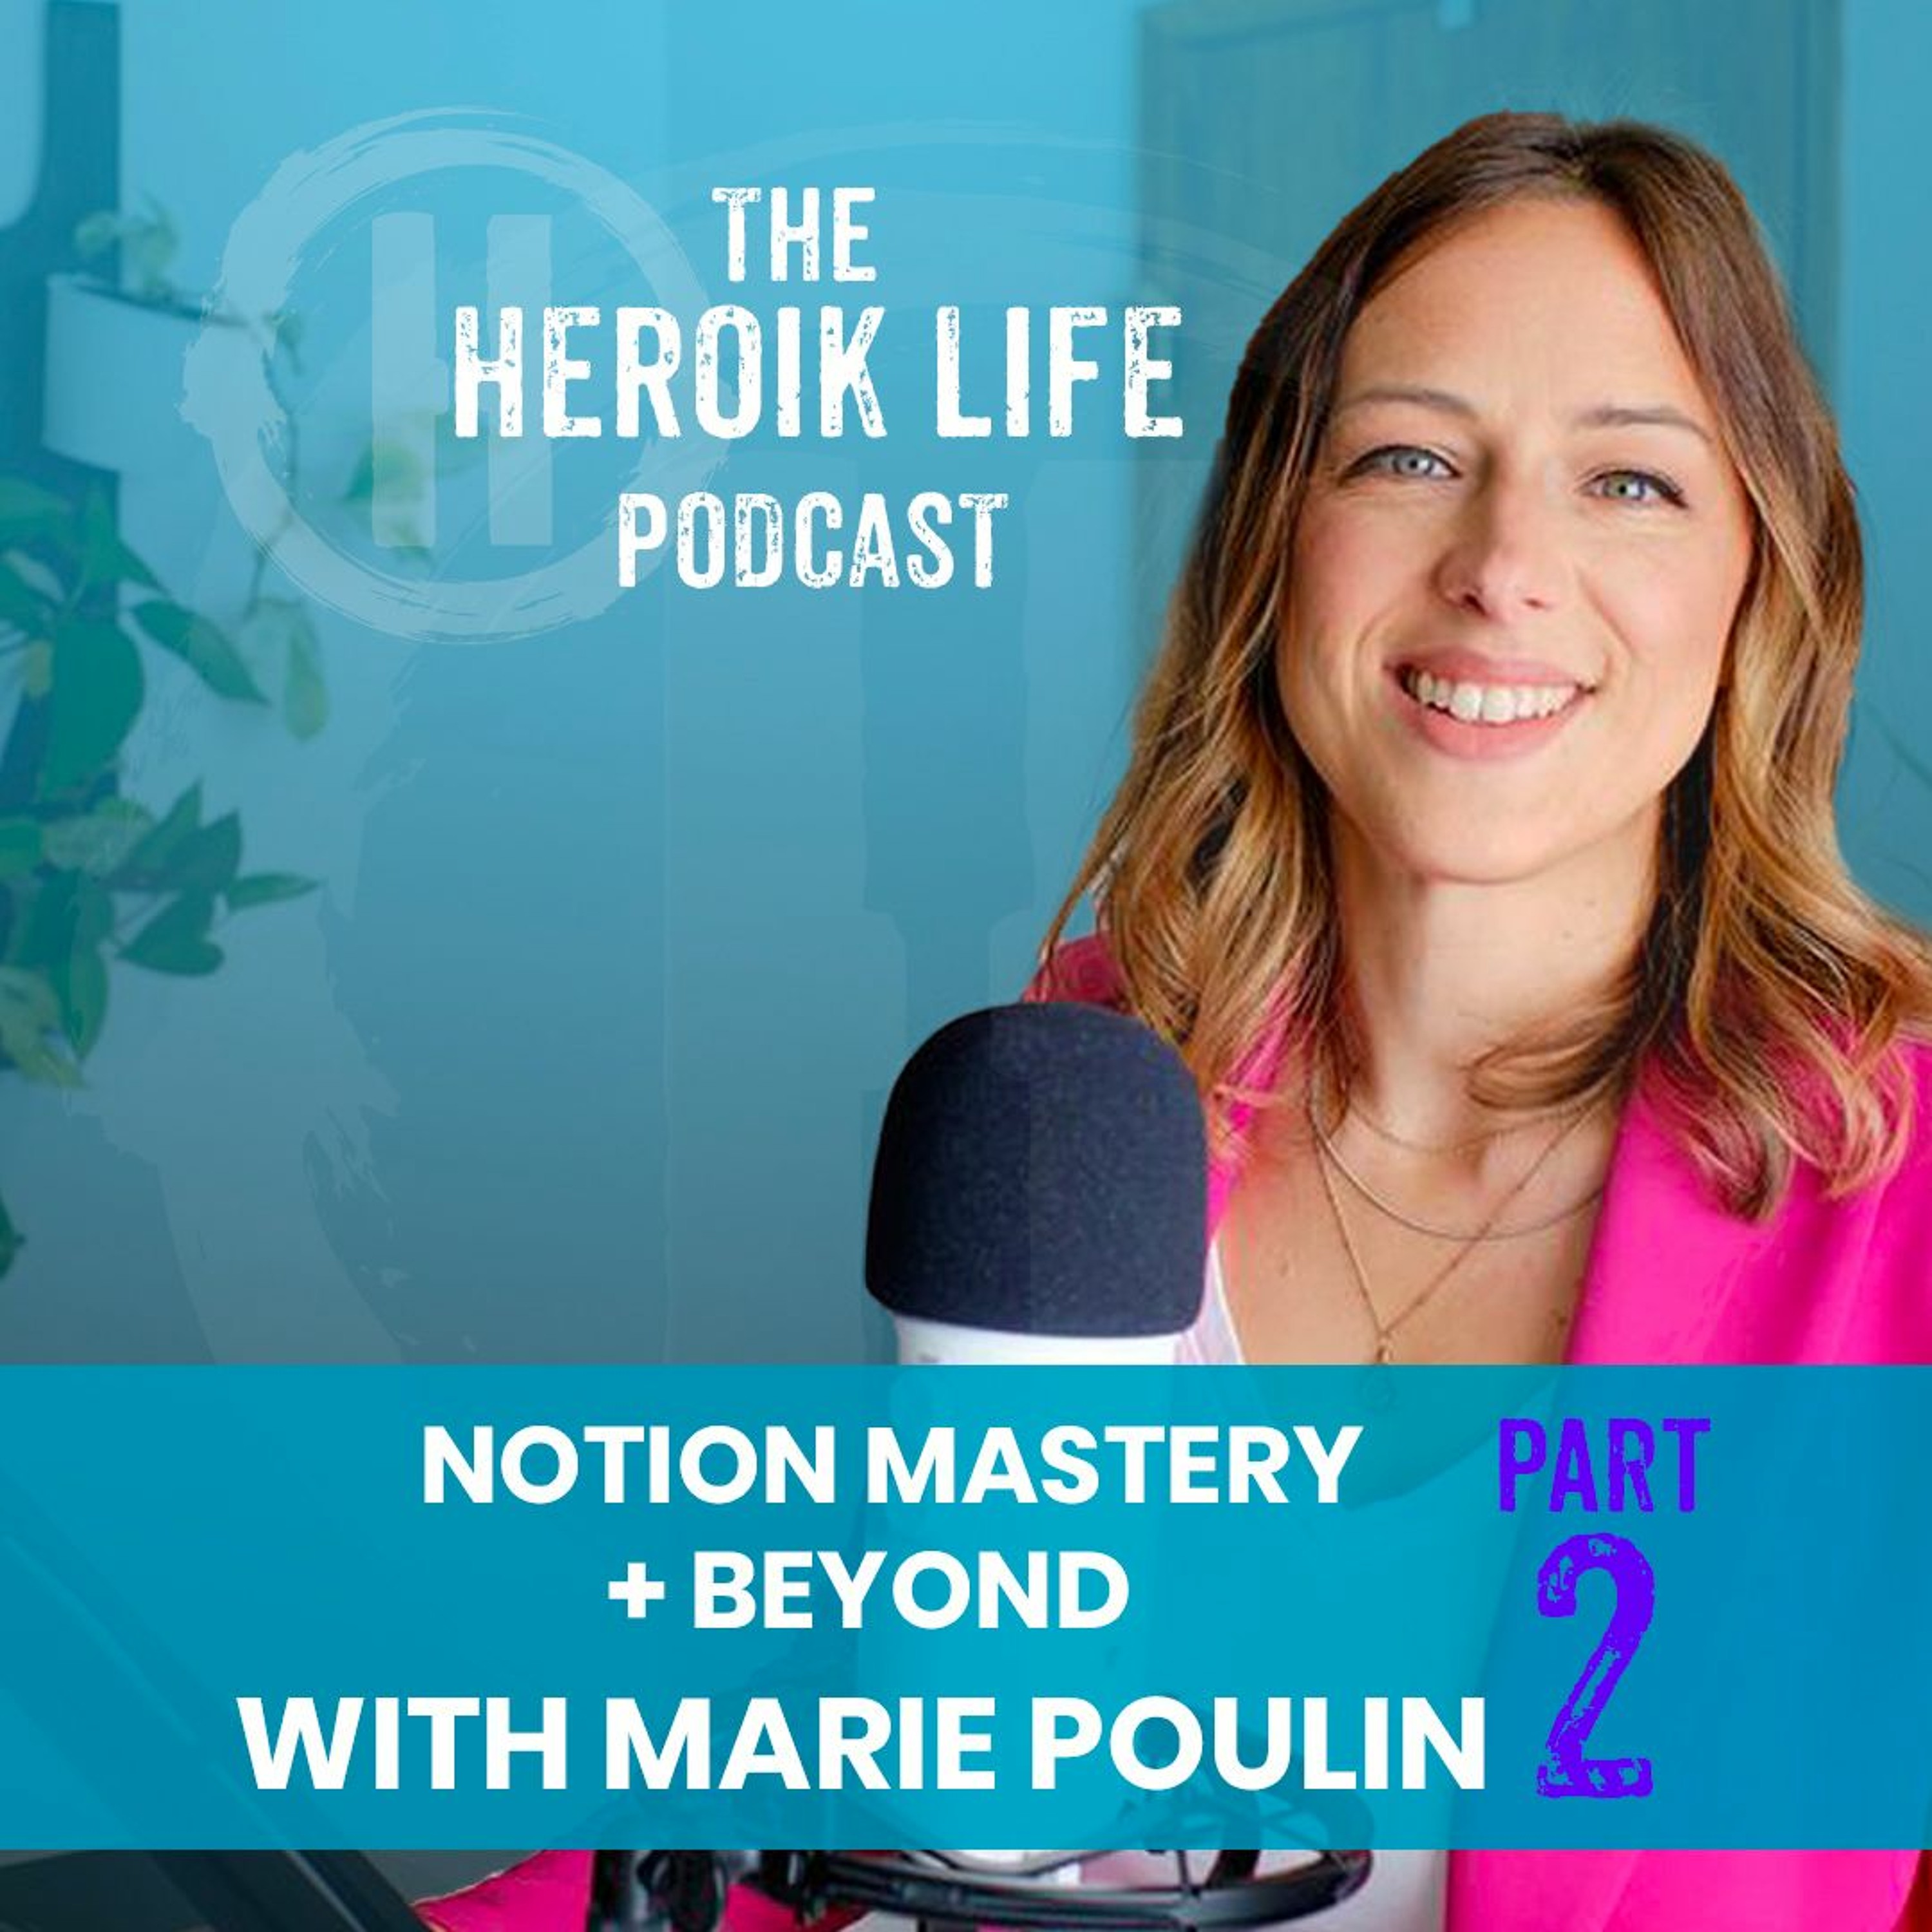 Artwork for podcast The Heroik Life Podcast